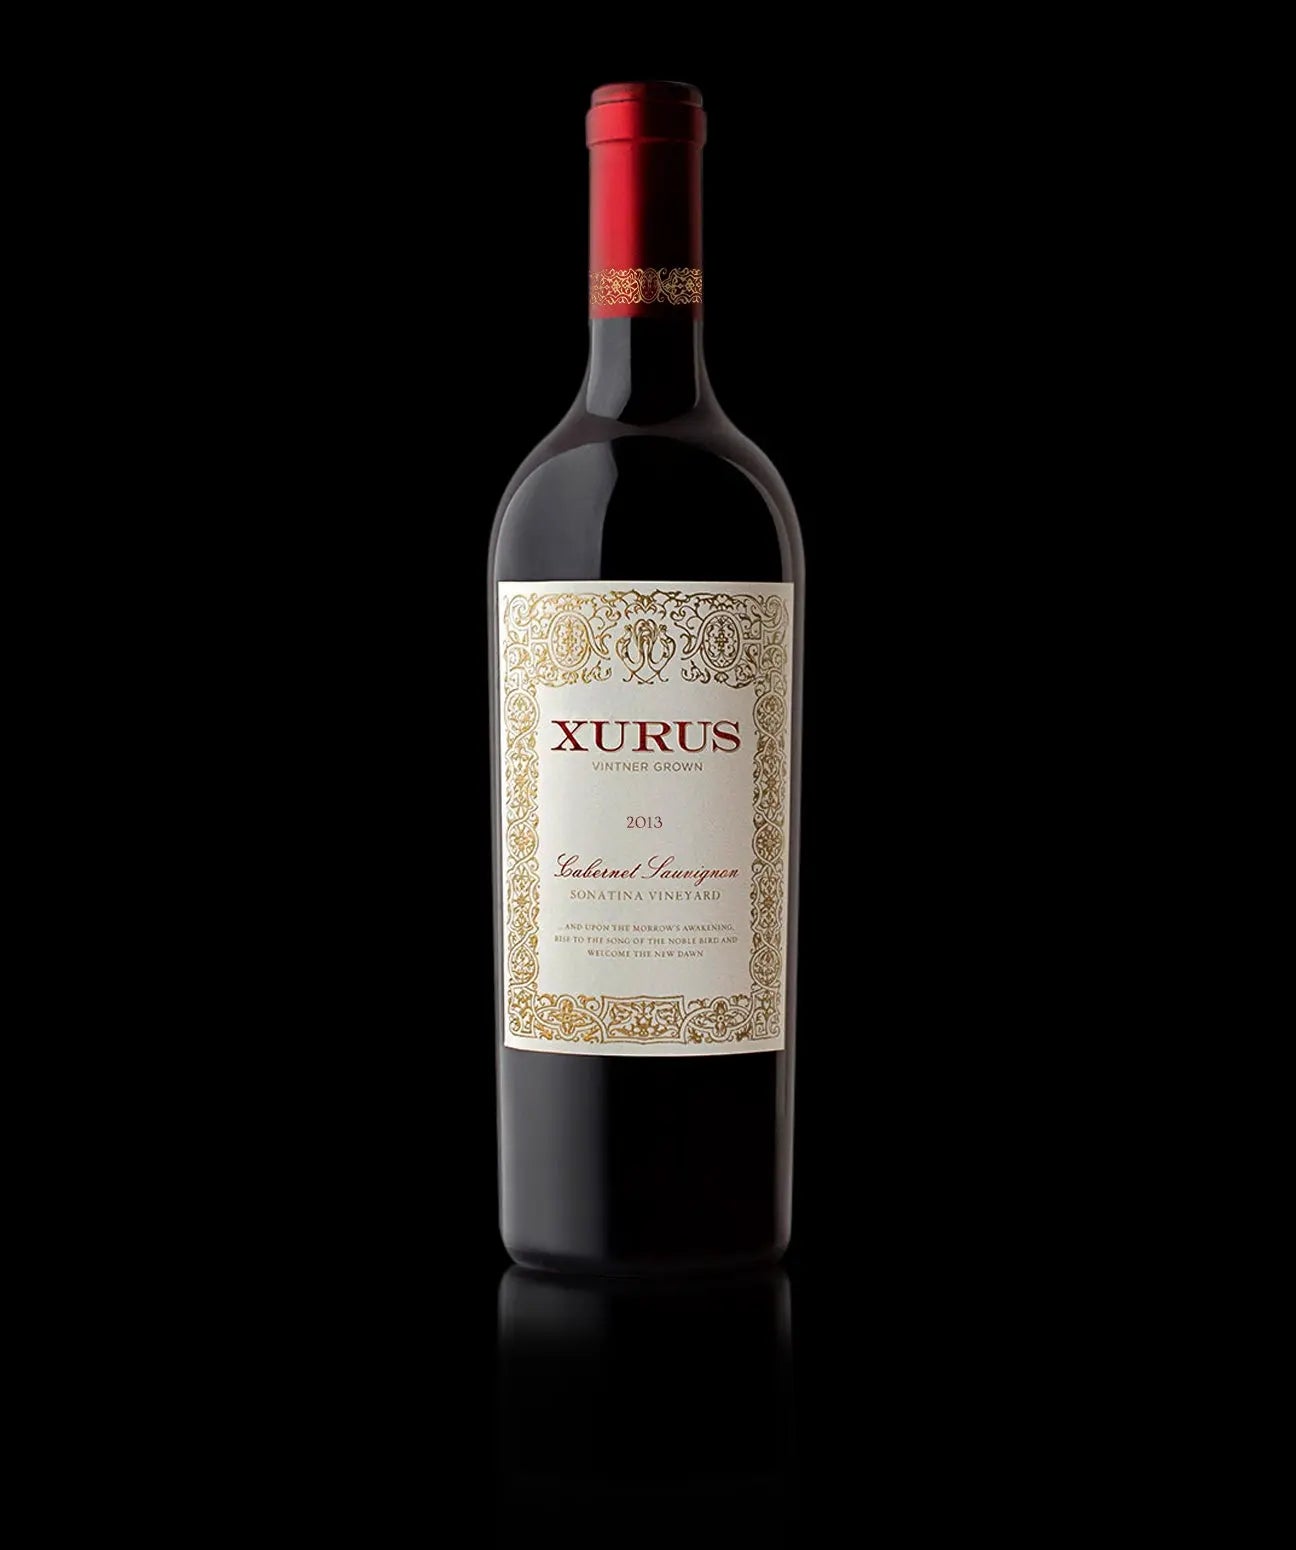 Image of a Xurus Cabernet Sauvignon 2013 bottle.